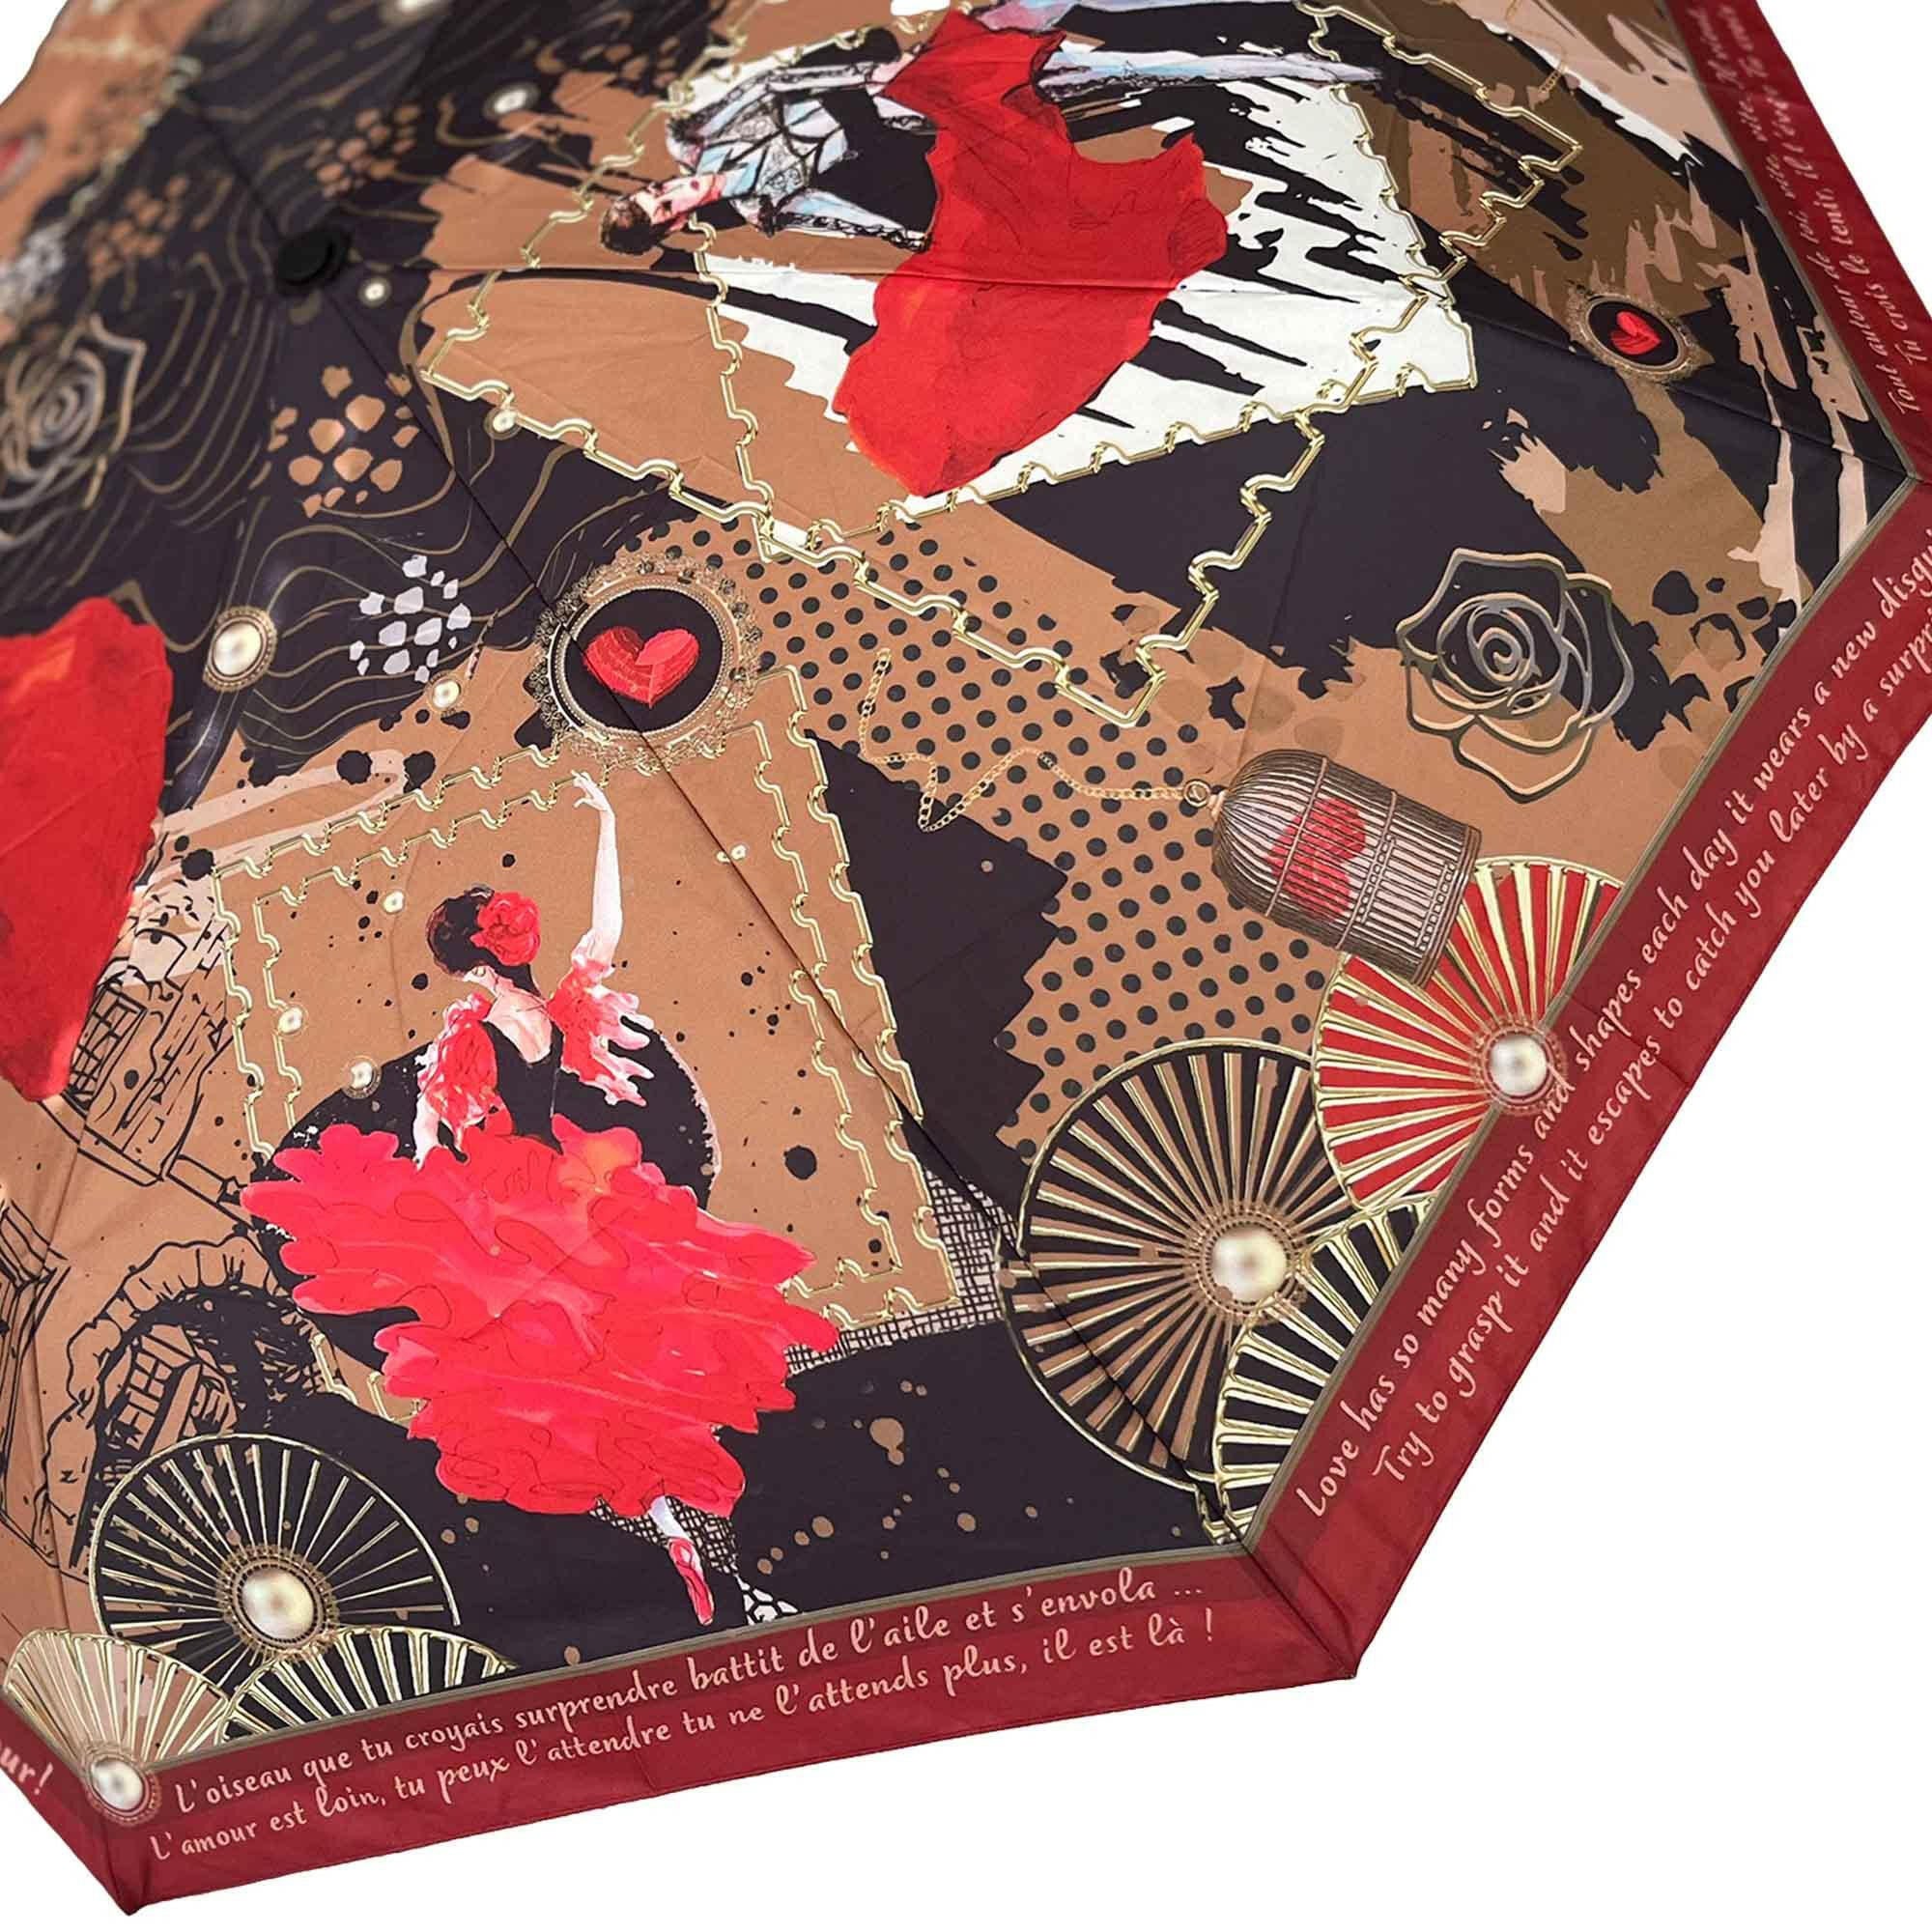 Artistic Umbrella – CARMEN - MORO DESIGN GIFTS